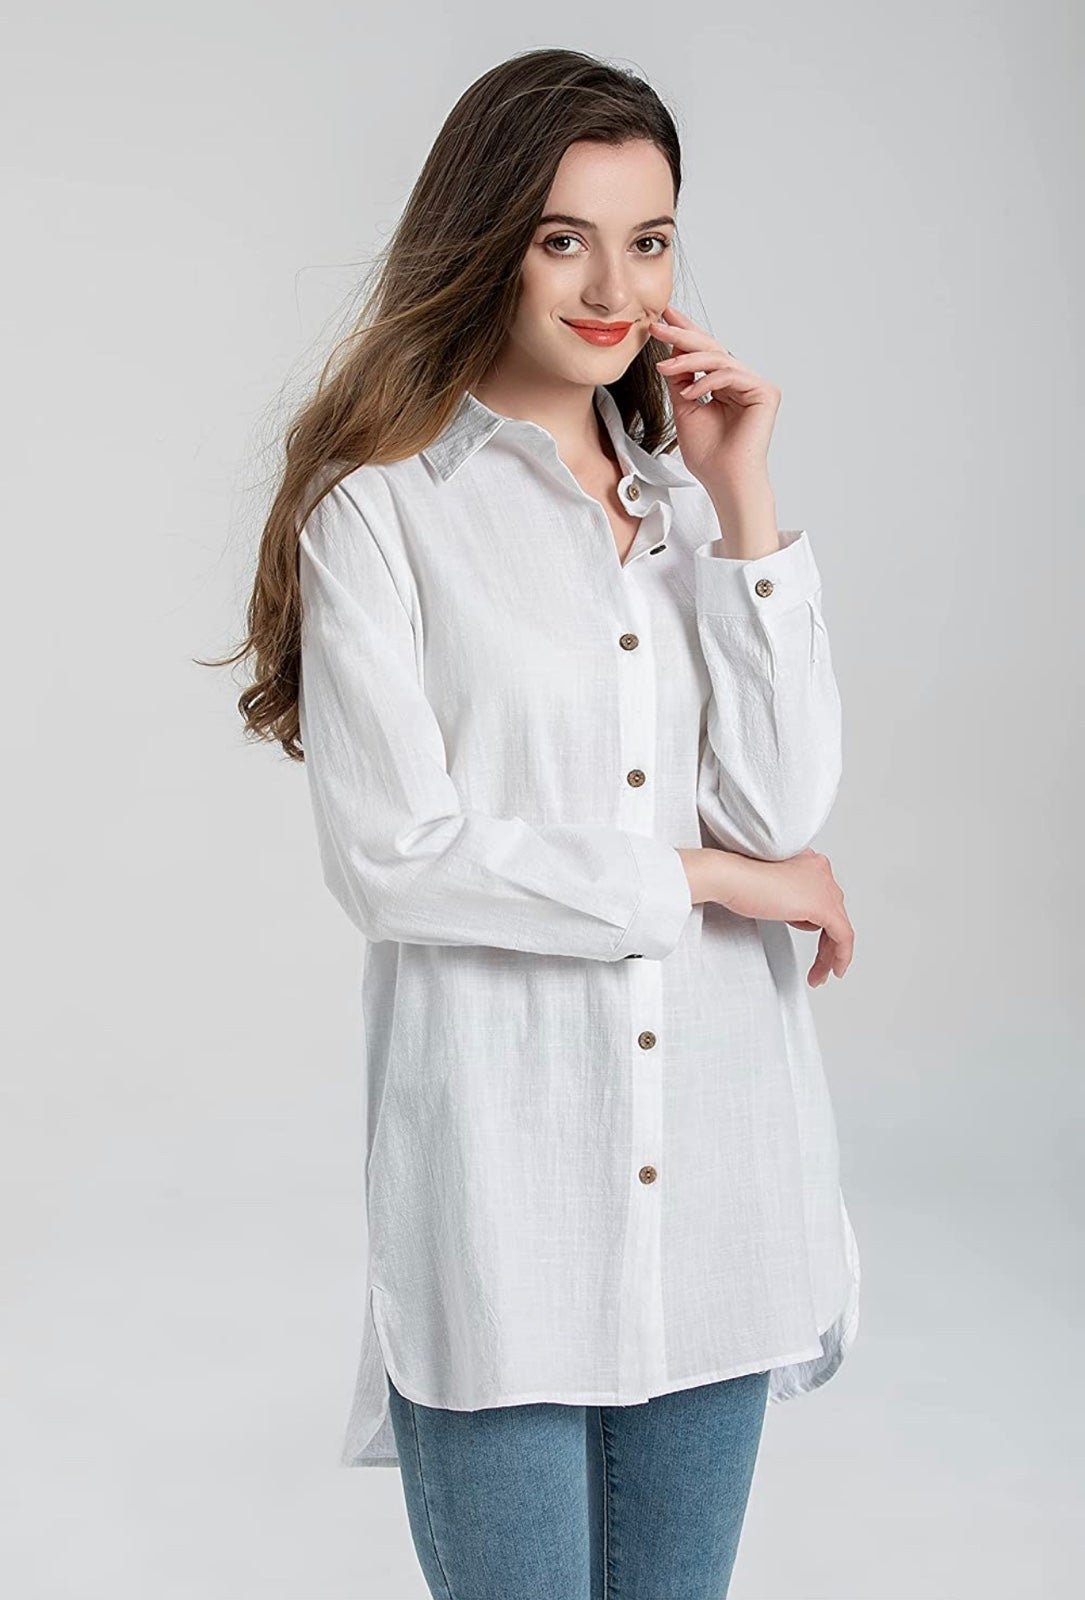 Discounted Women´s Long Sleeve Shirts Button Down Blouse Cotton Tunic High Low Tops NCVHAaXeu just for you